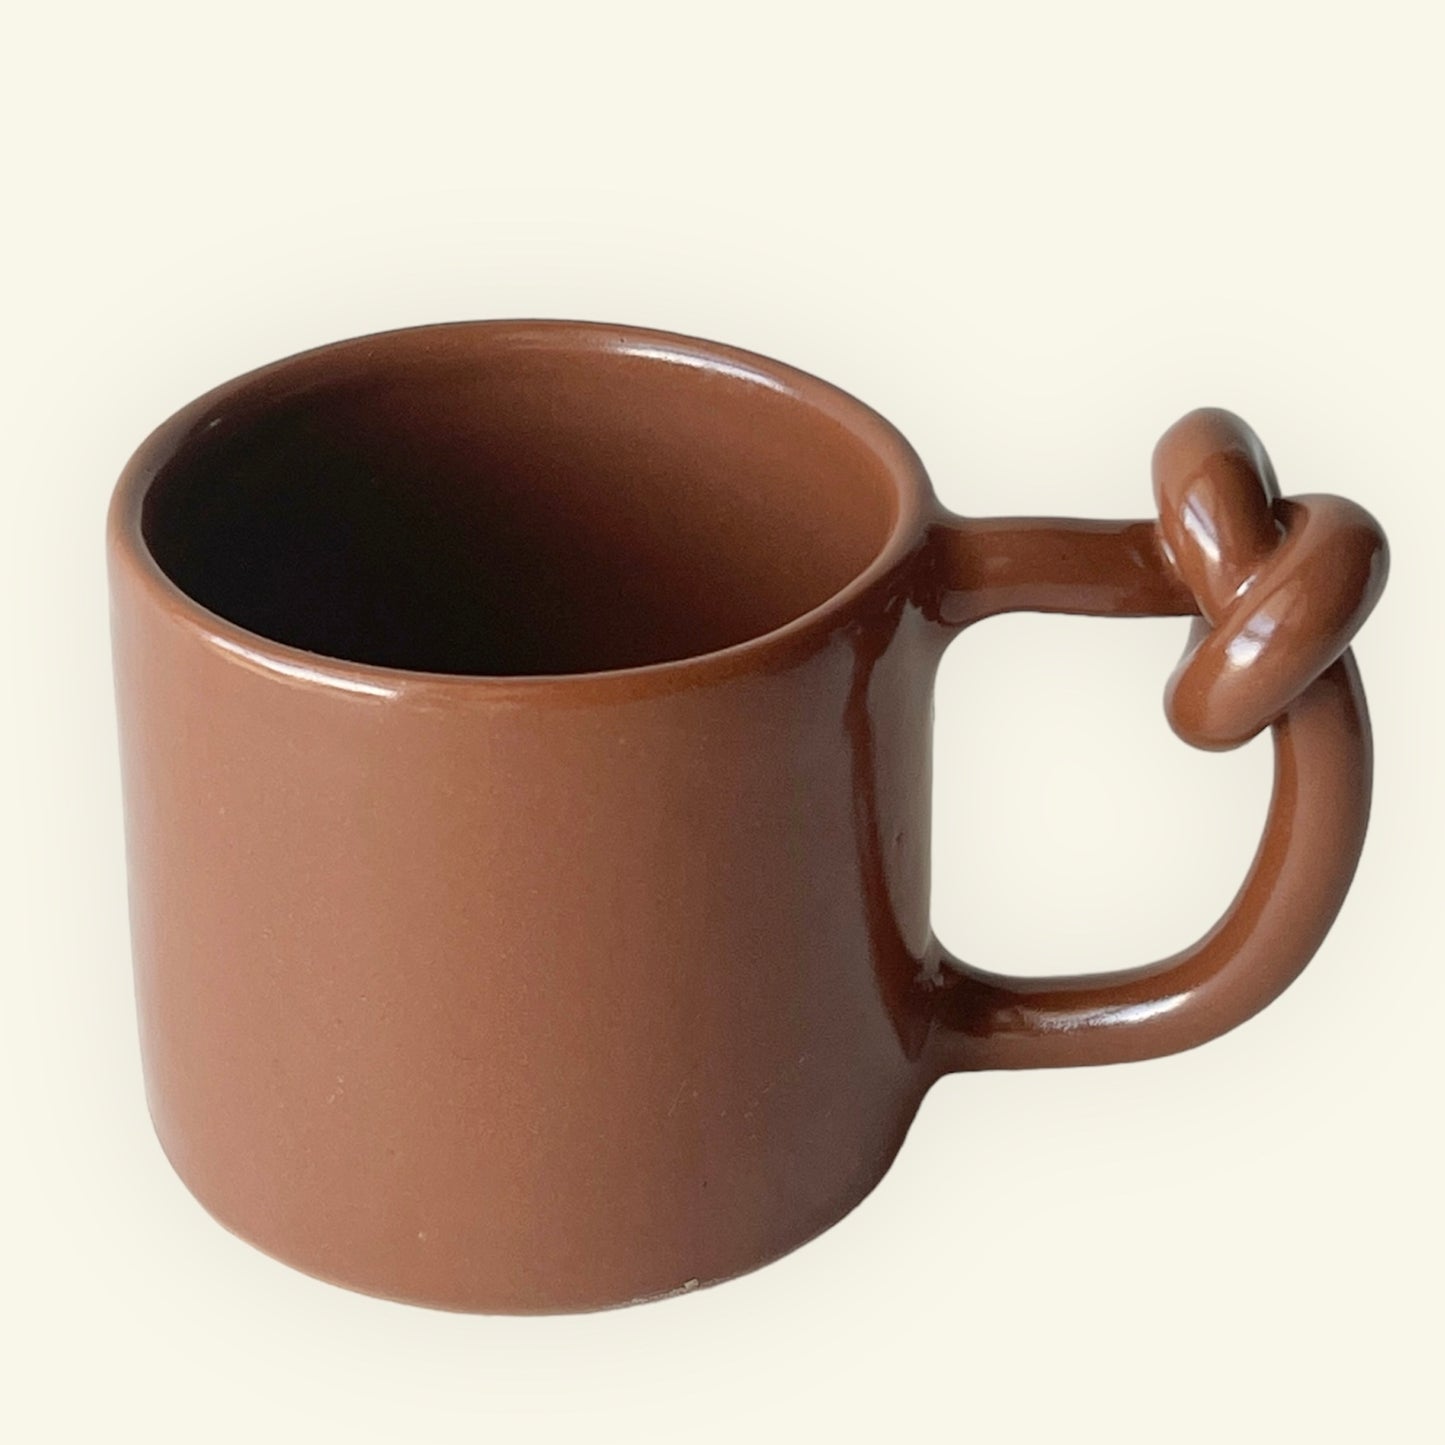 Knotted Coffee Mug - Chocolate